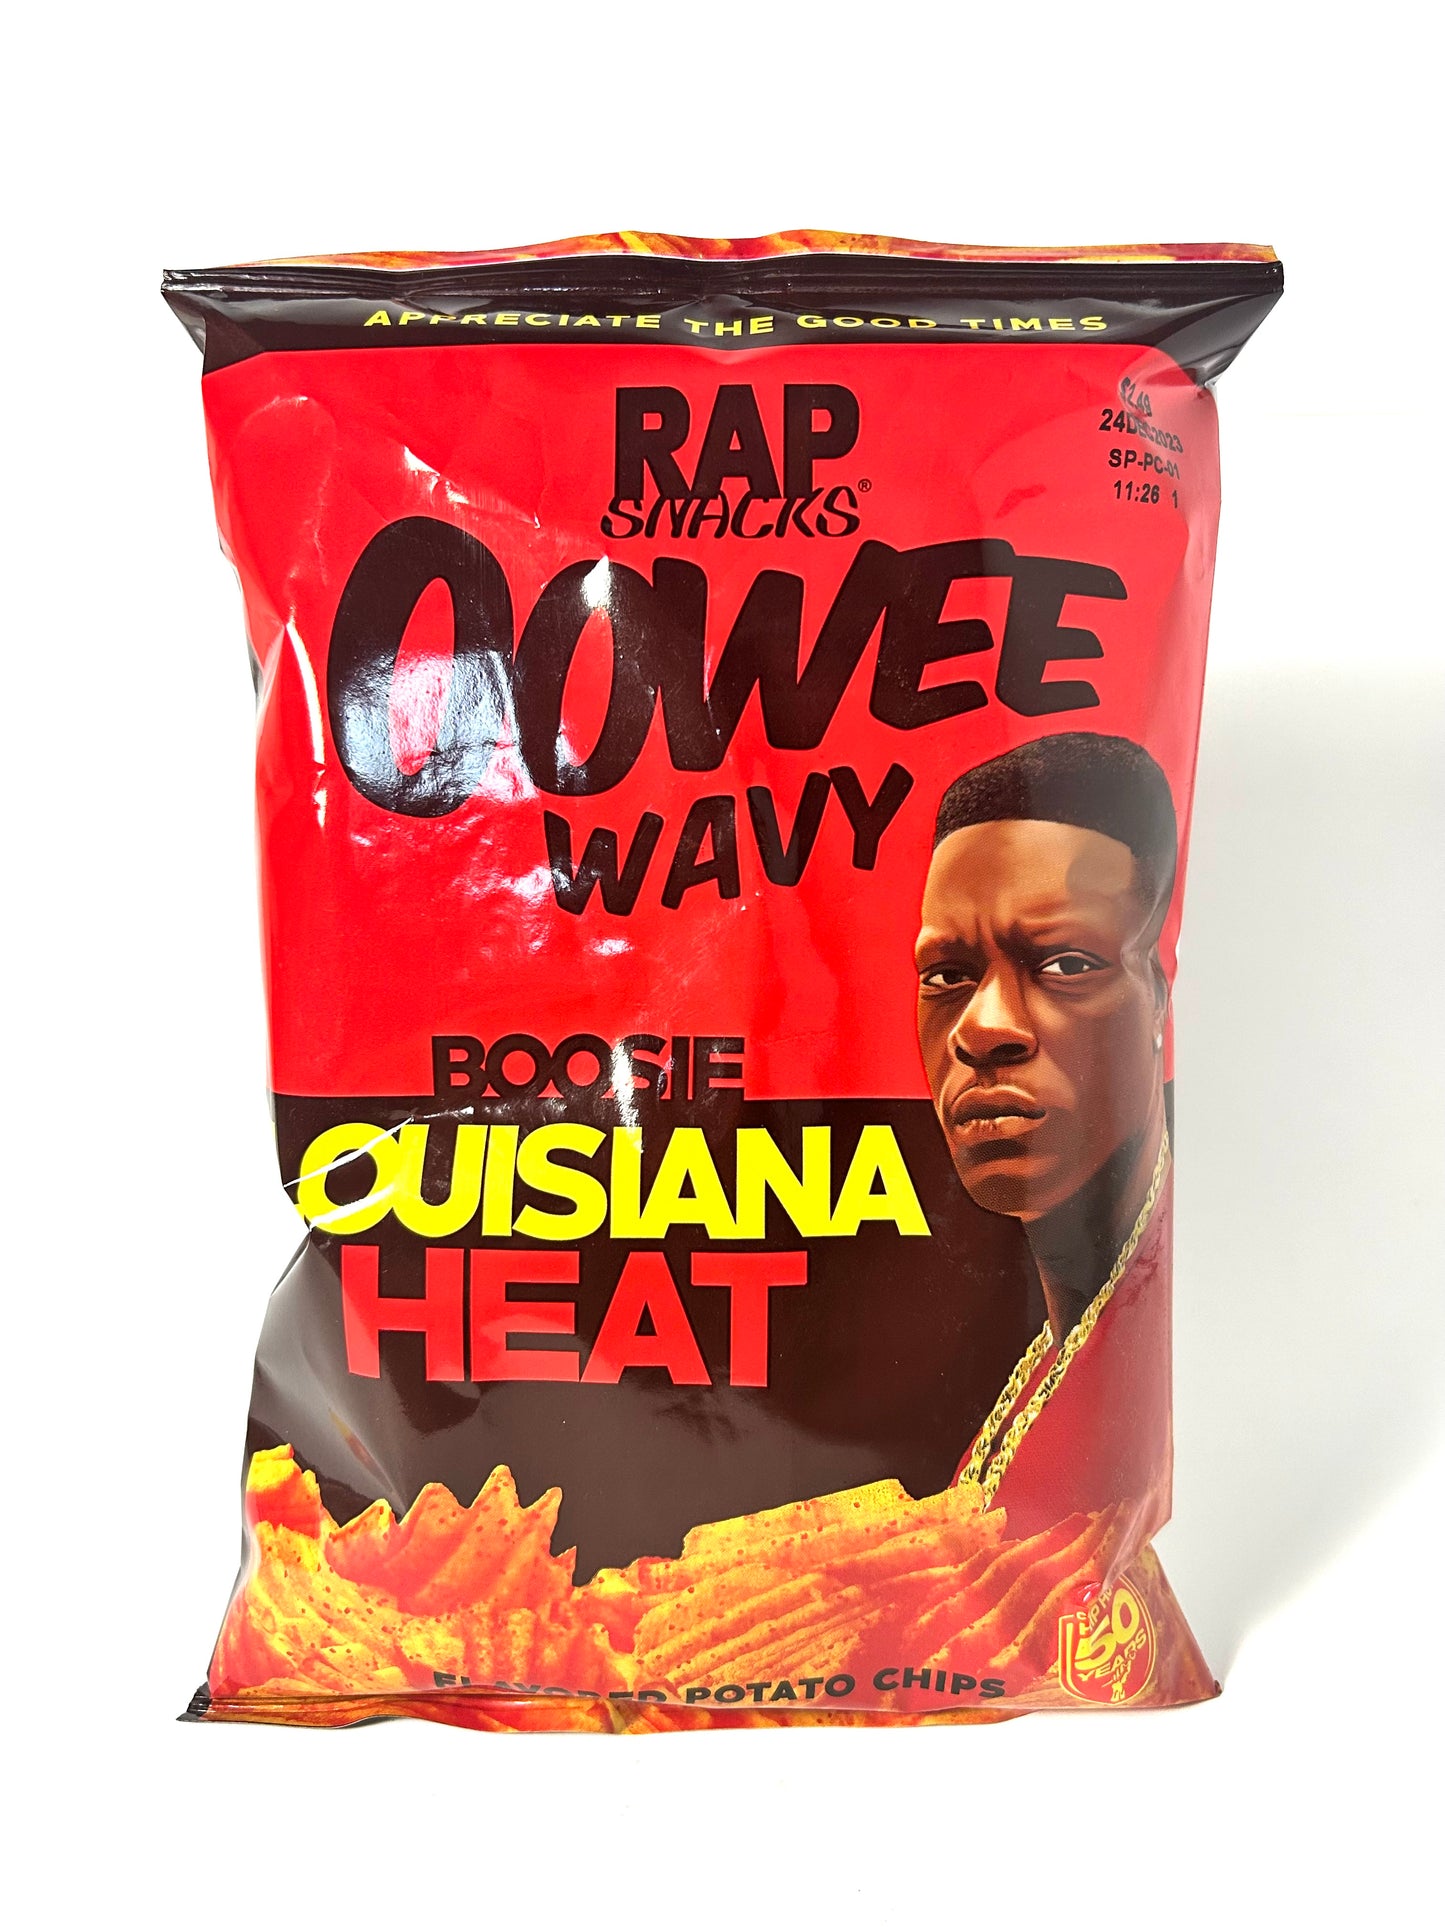 Rap Snacks Boosie Oowee Wavy Louisiana Heat